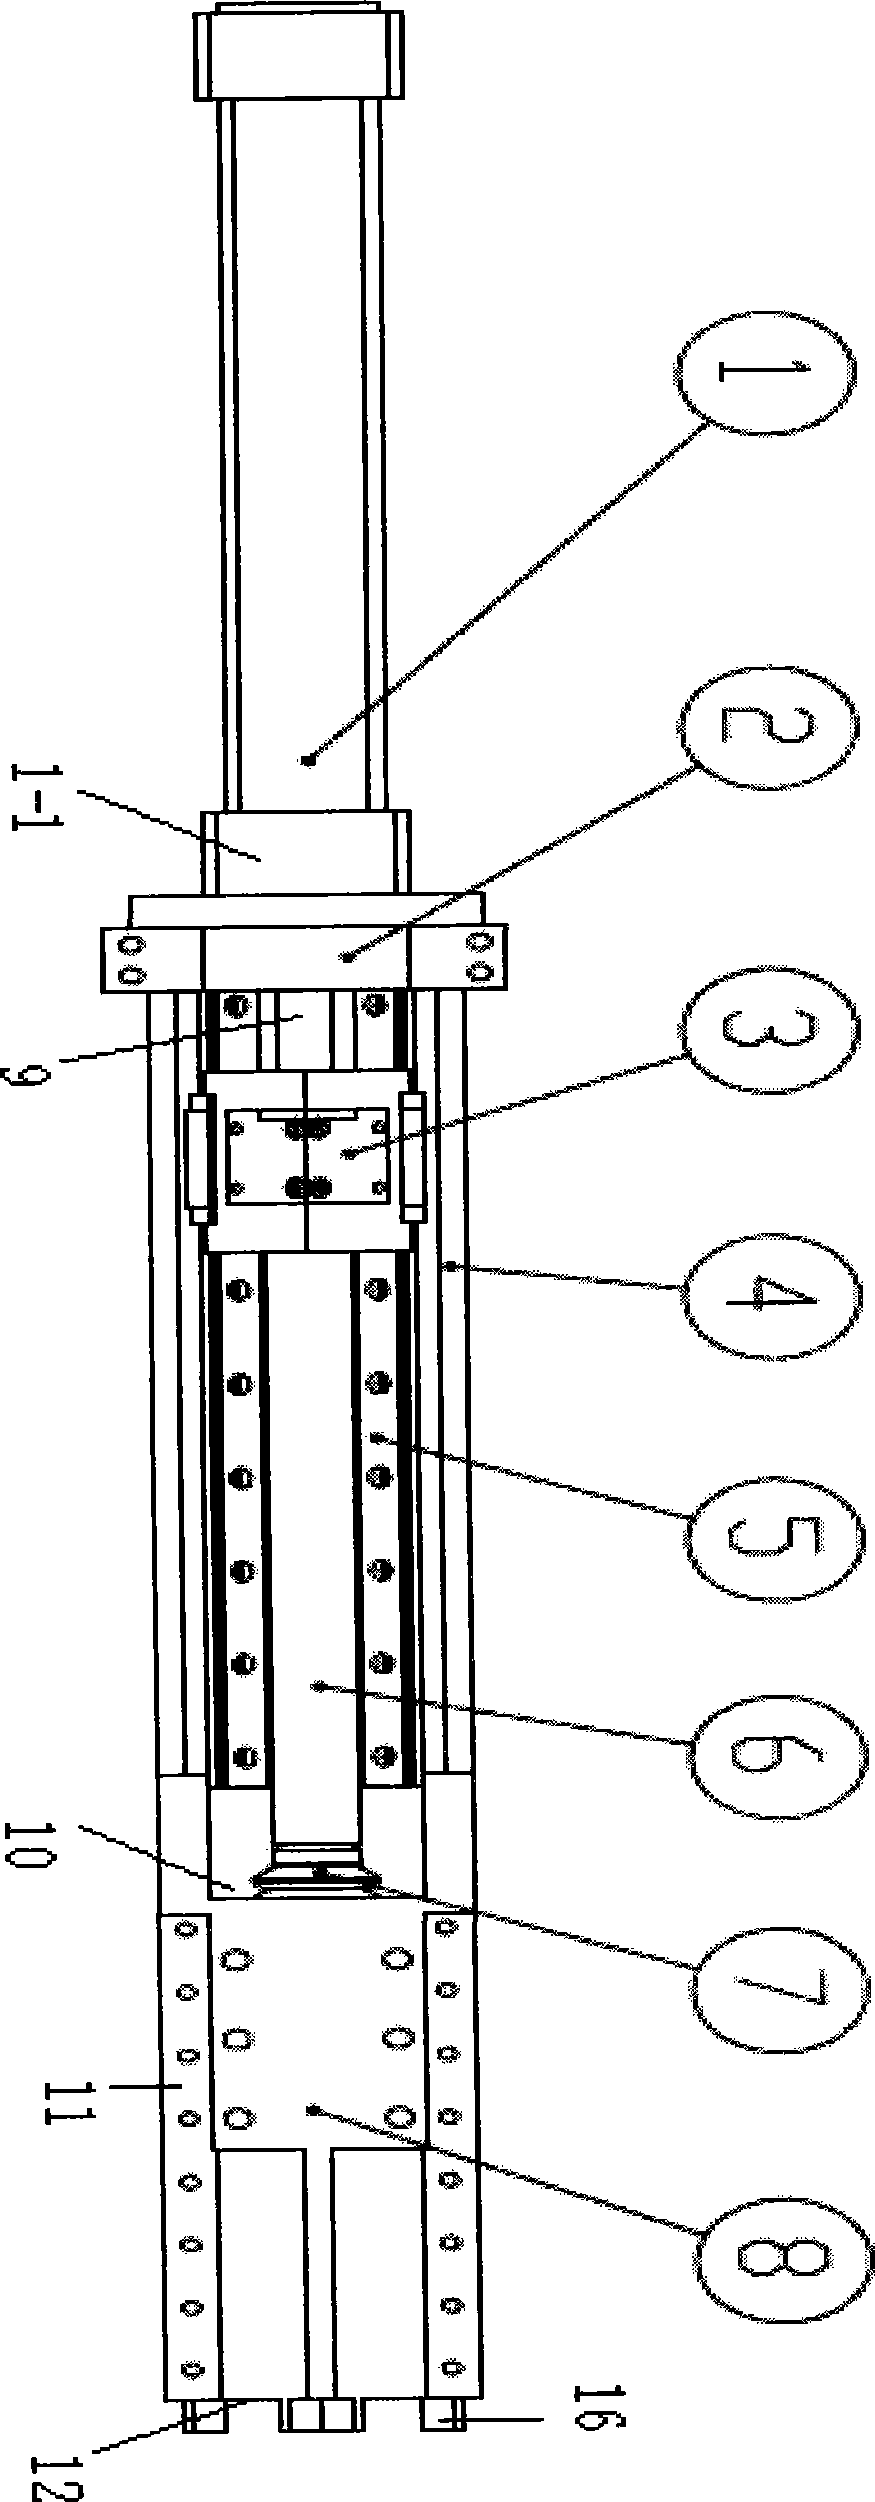 Automatic bonding device of Halbach permanent magnet array